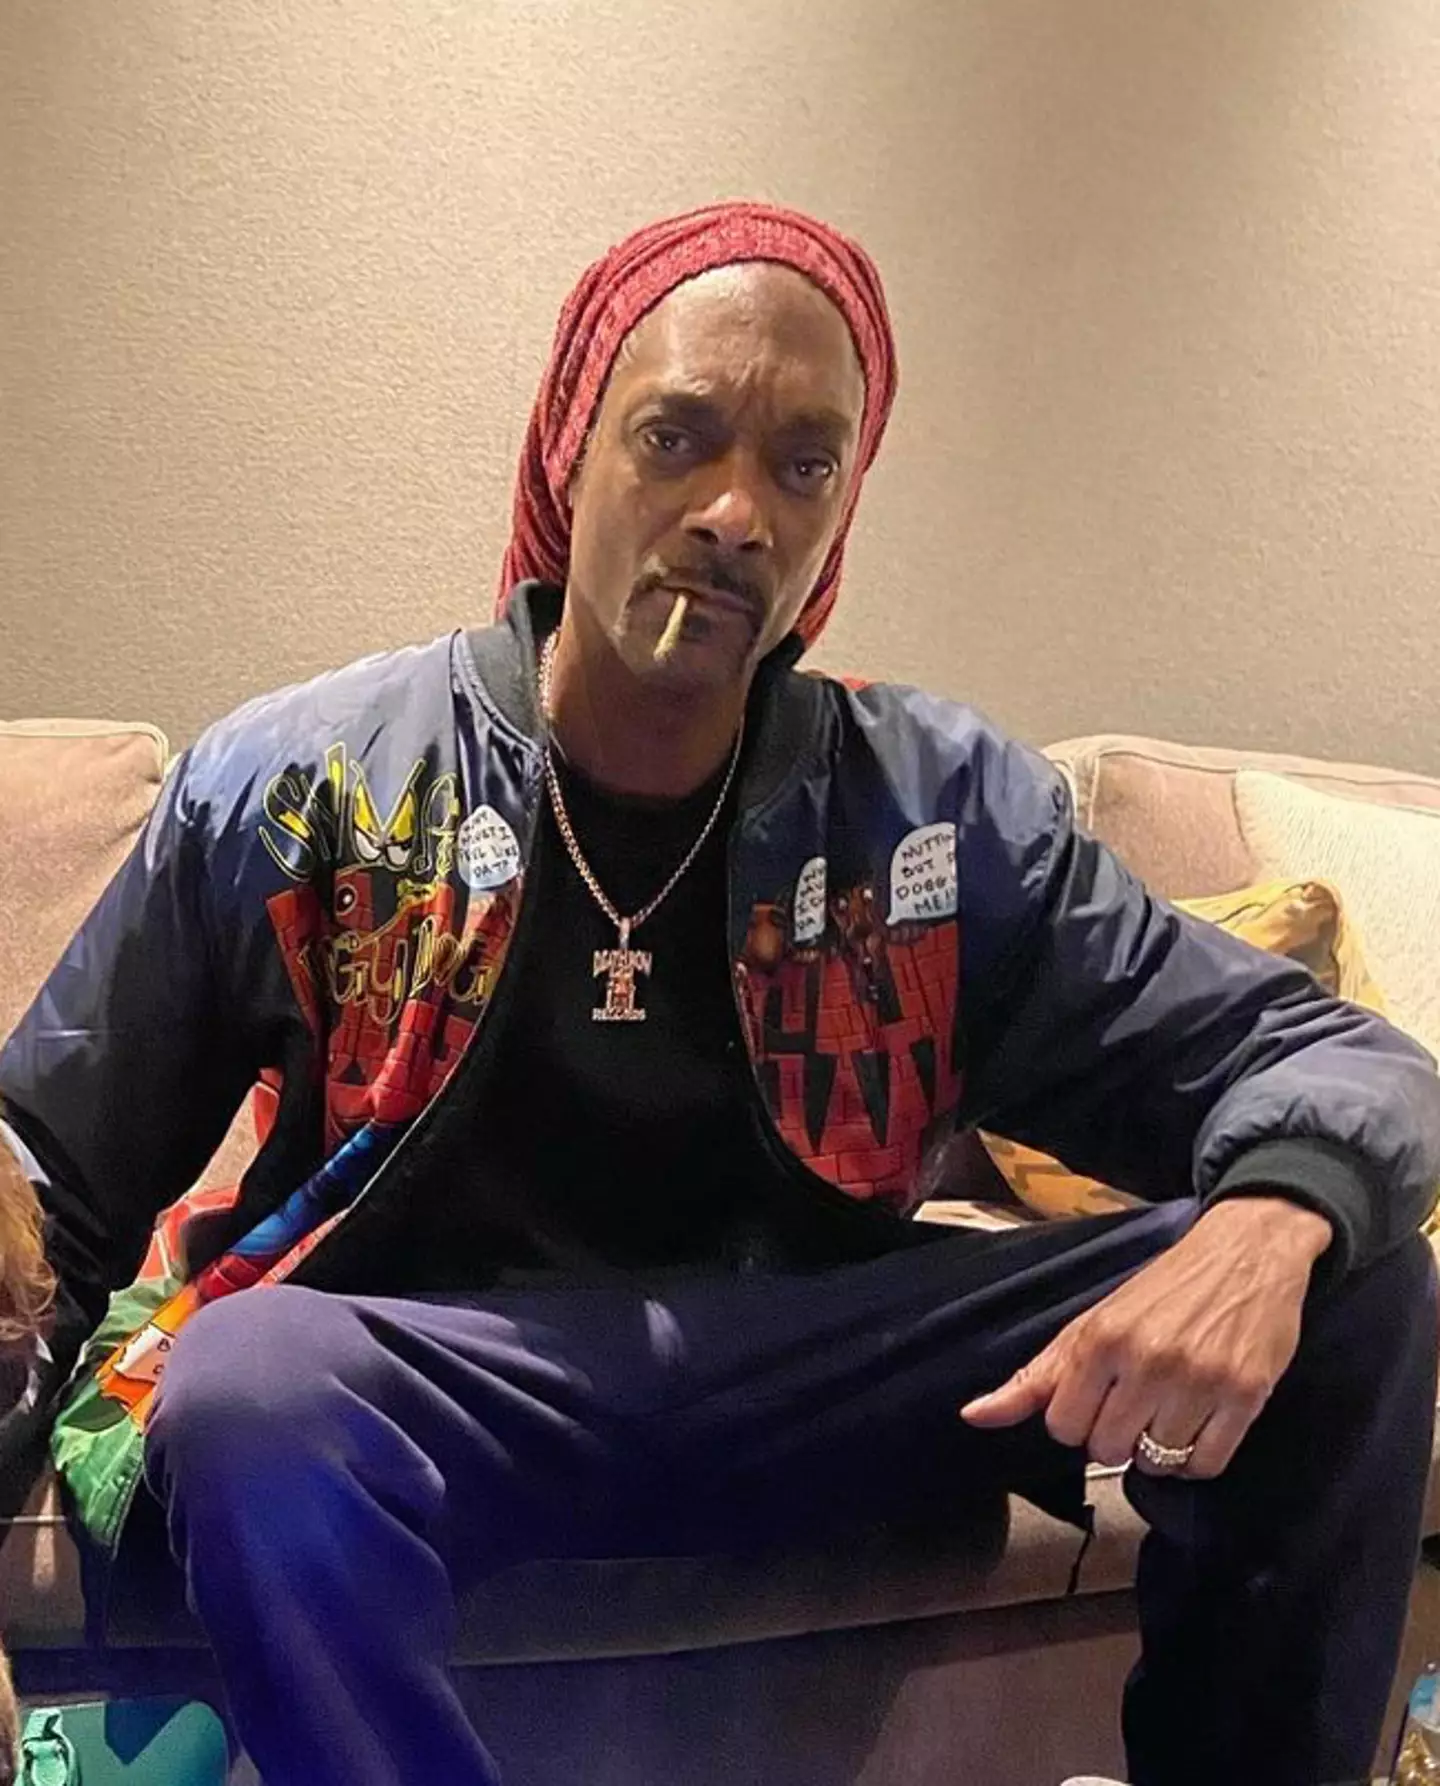 Snoop Dogg seemingly confirmed his interest on Instagram.